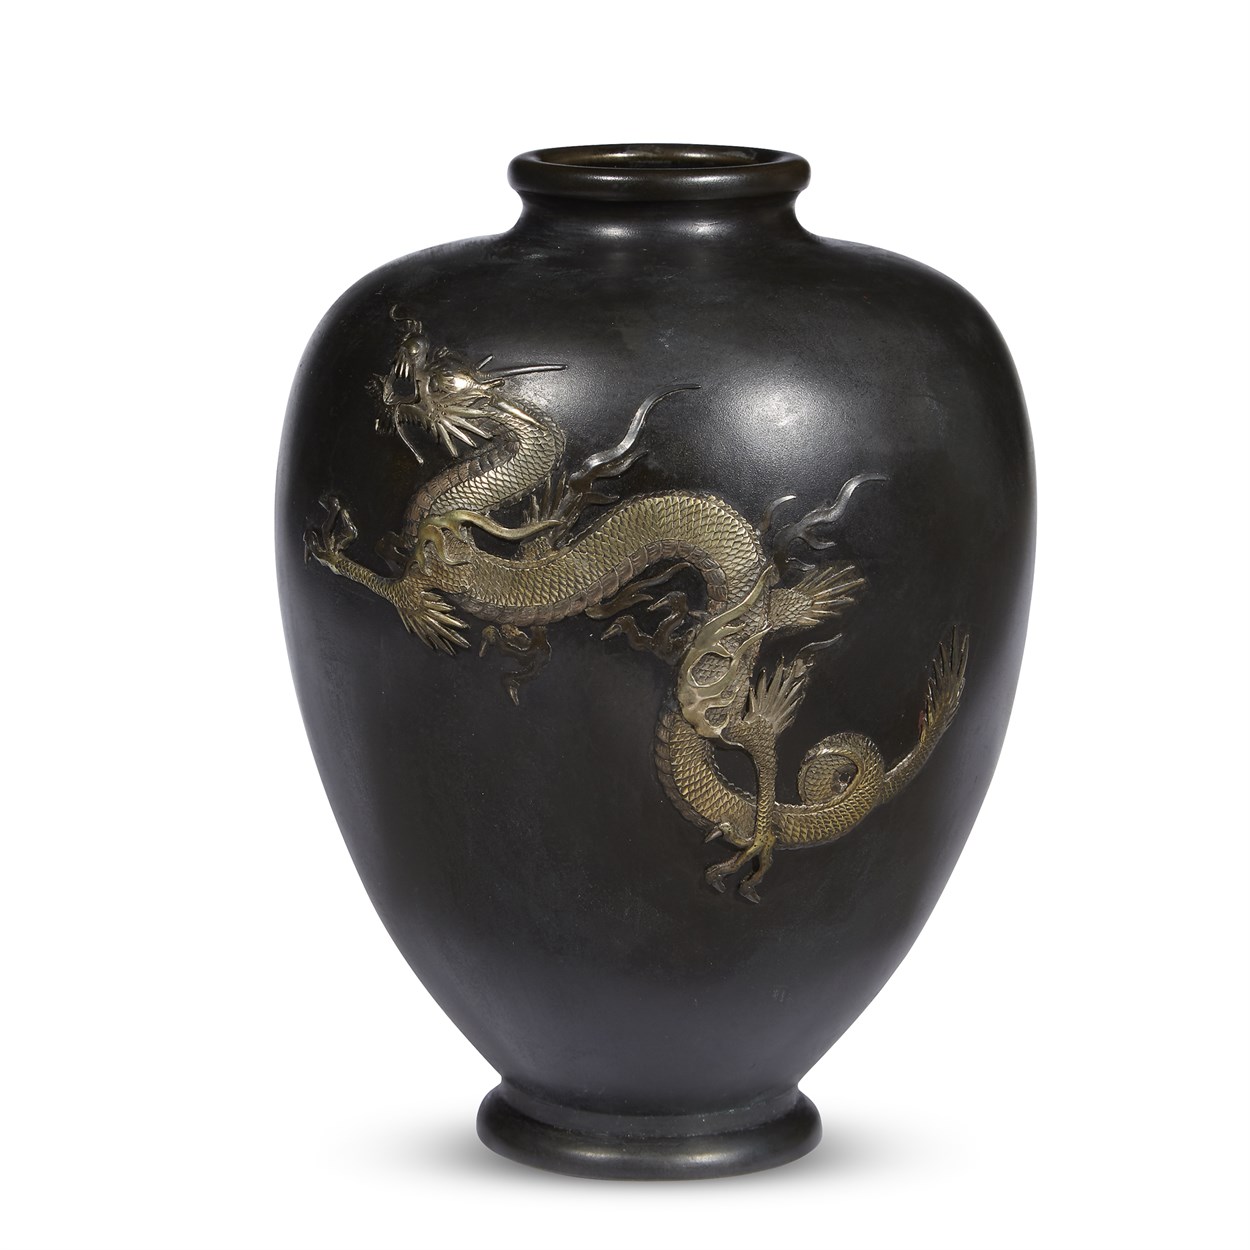 Lot 60 - A Japanese mixed metal "Dragon" vase